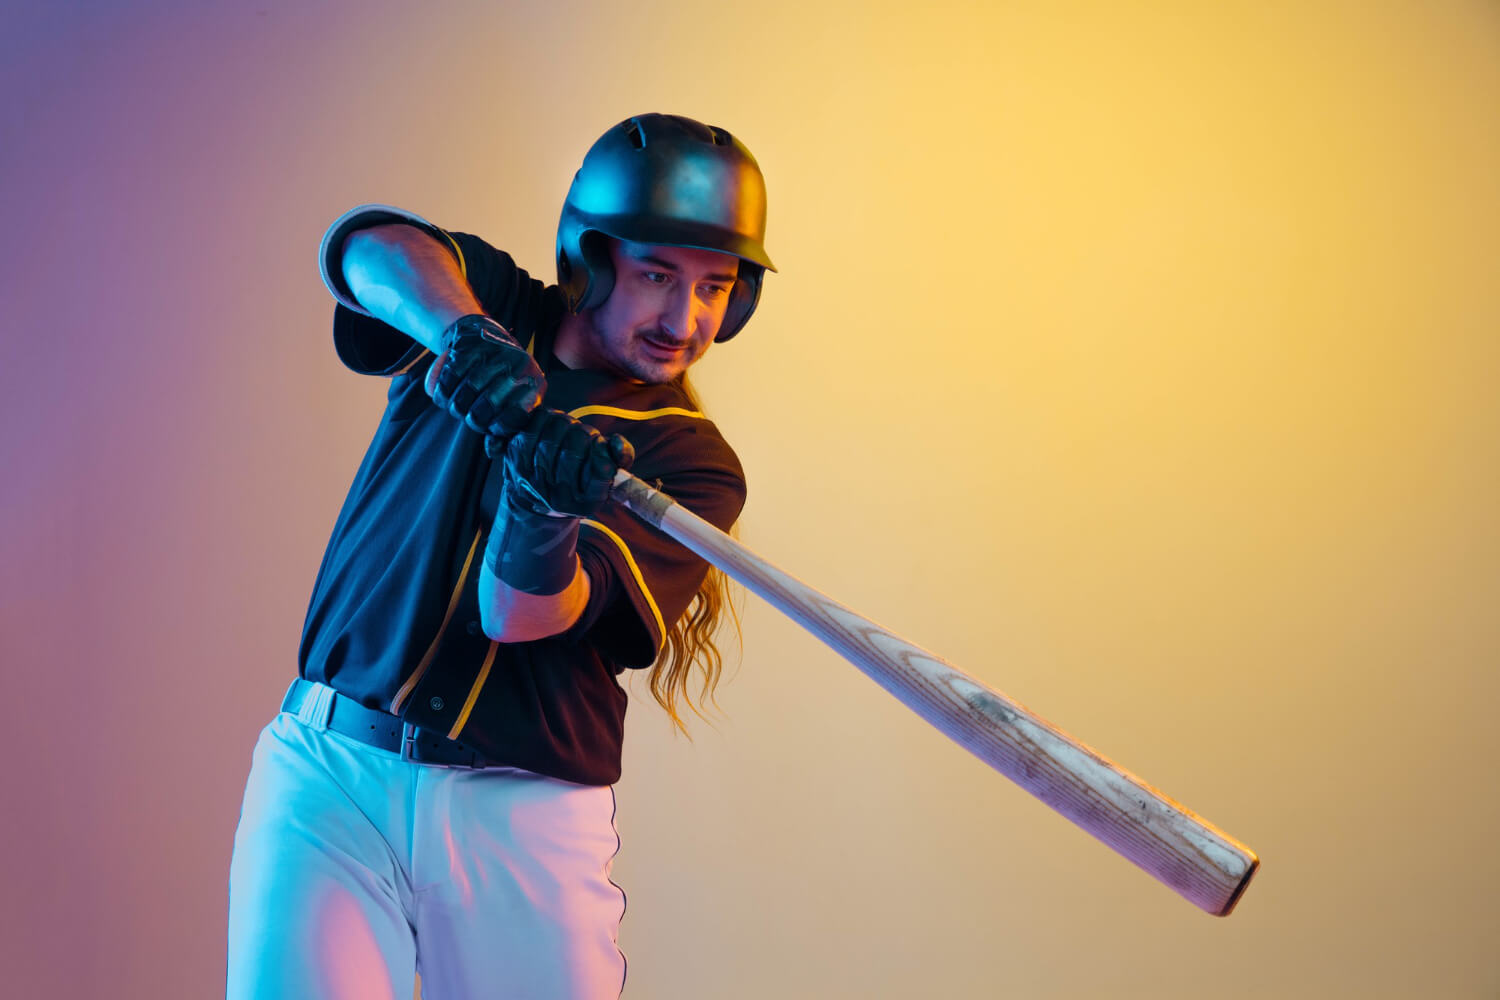 baseball-player-pitcher-black-uniform-posing-confident-gradient-background-neon-ligh